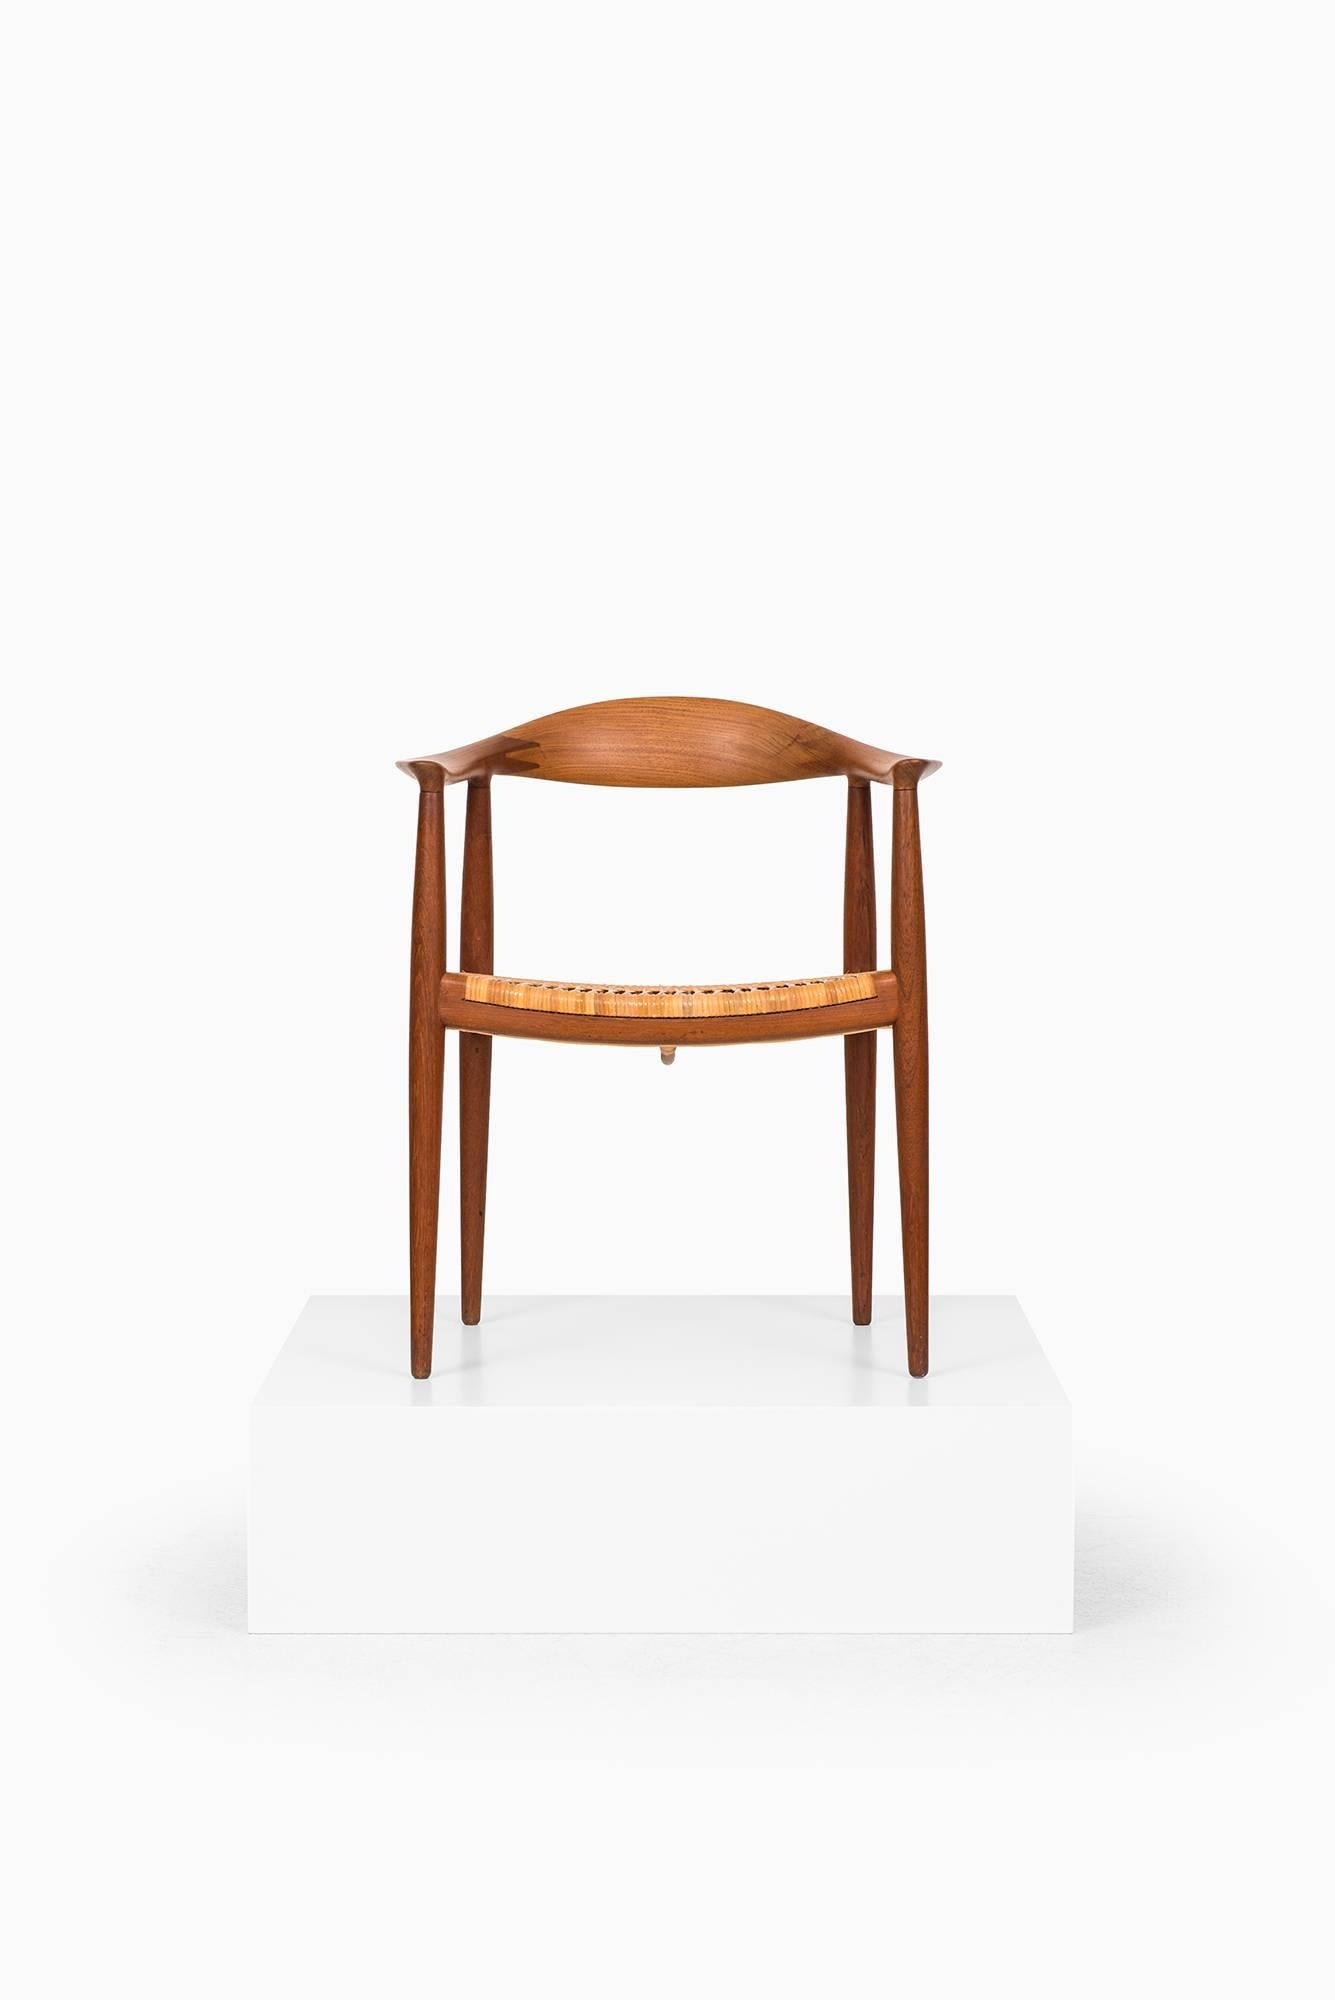 Rare armchair model JH-501, the chair designed by Hans Wegner. Produced by Johannes Hansen in Denmark.